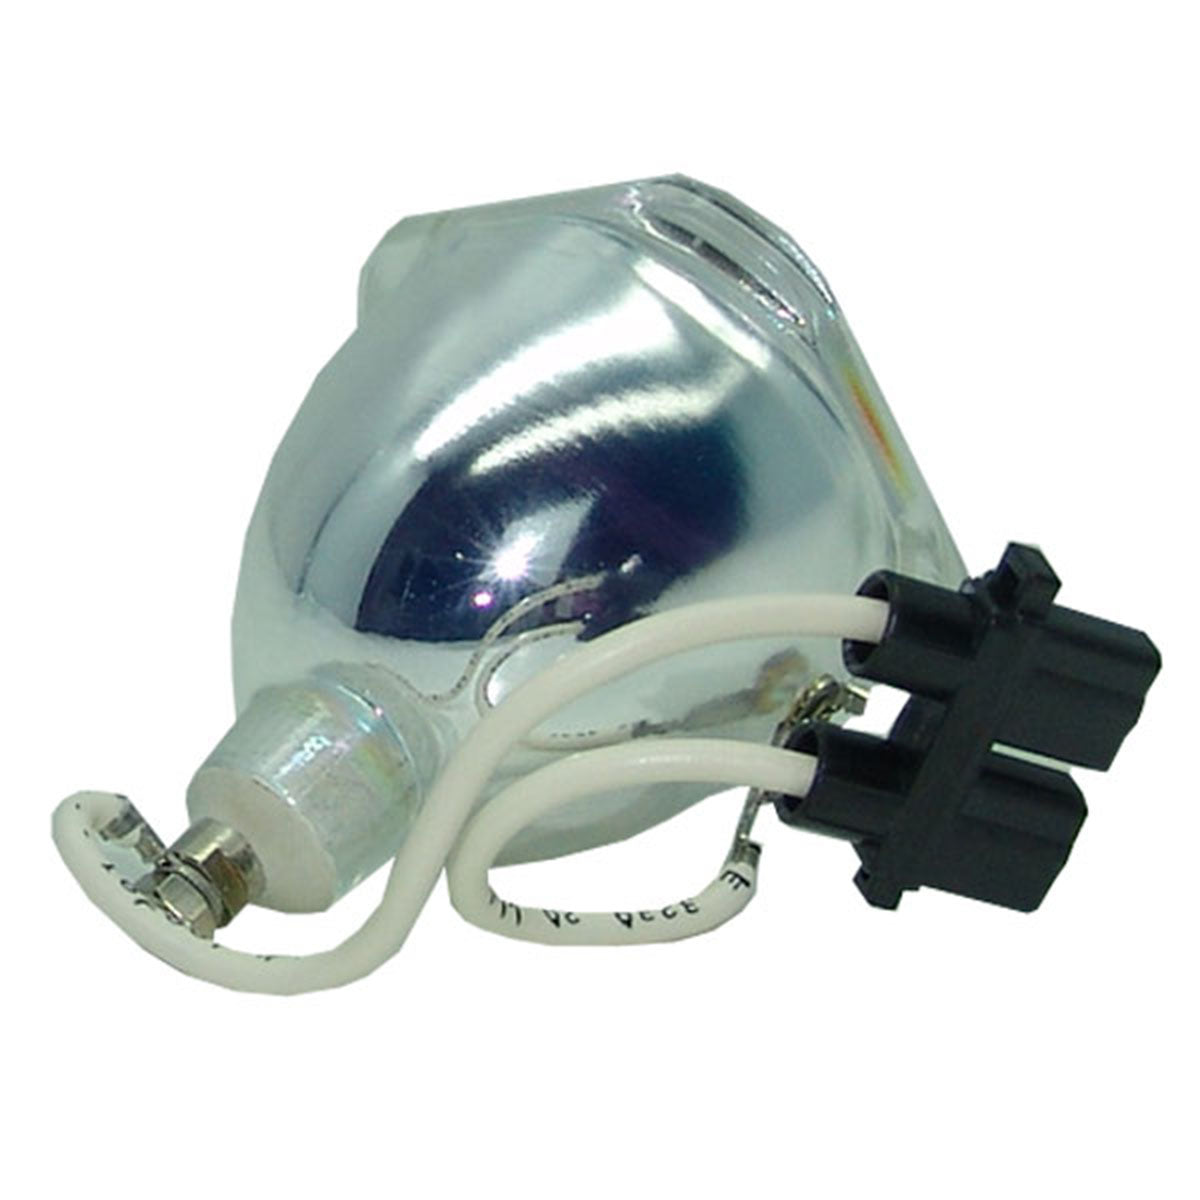 Acer EC.J0501.001 Osram Projector Bare Lamp